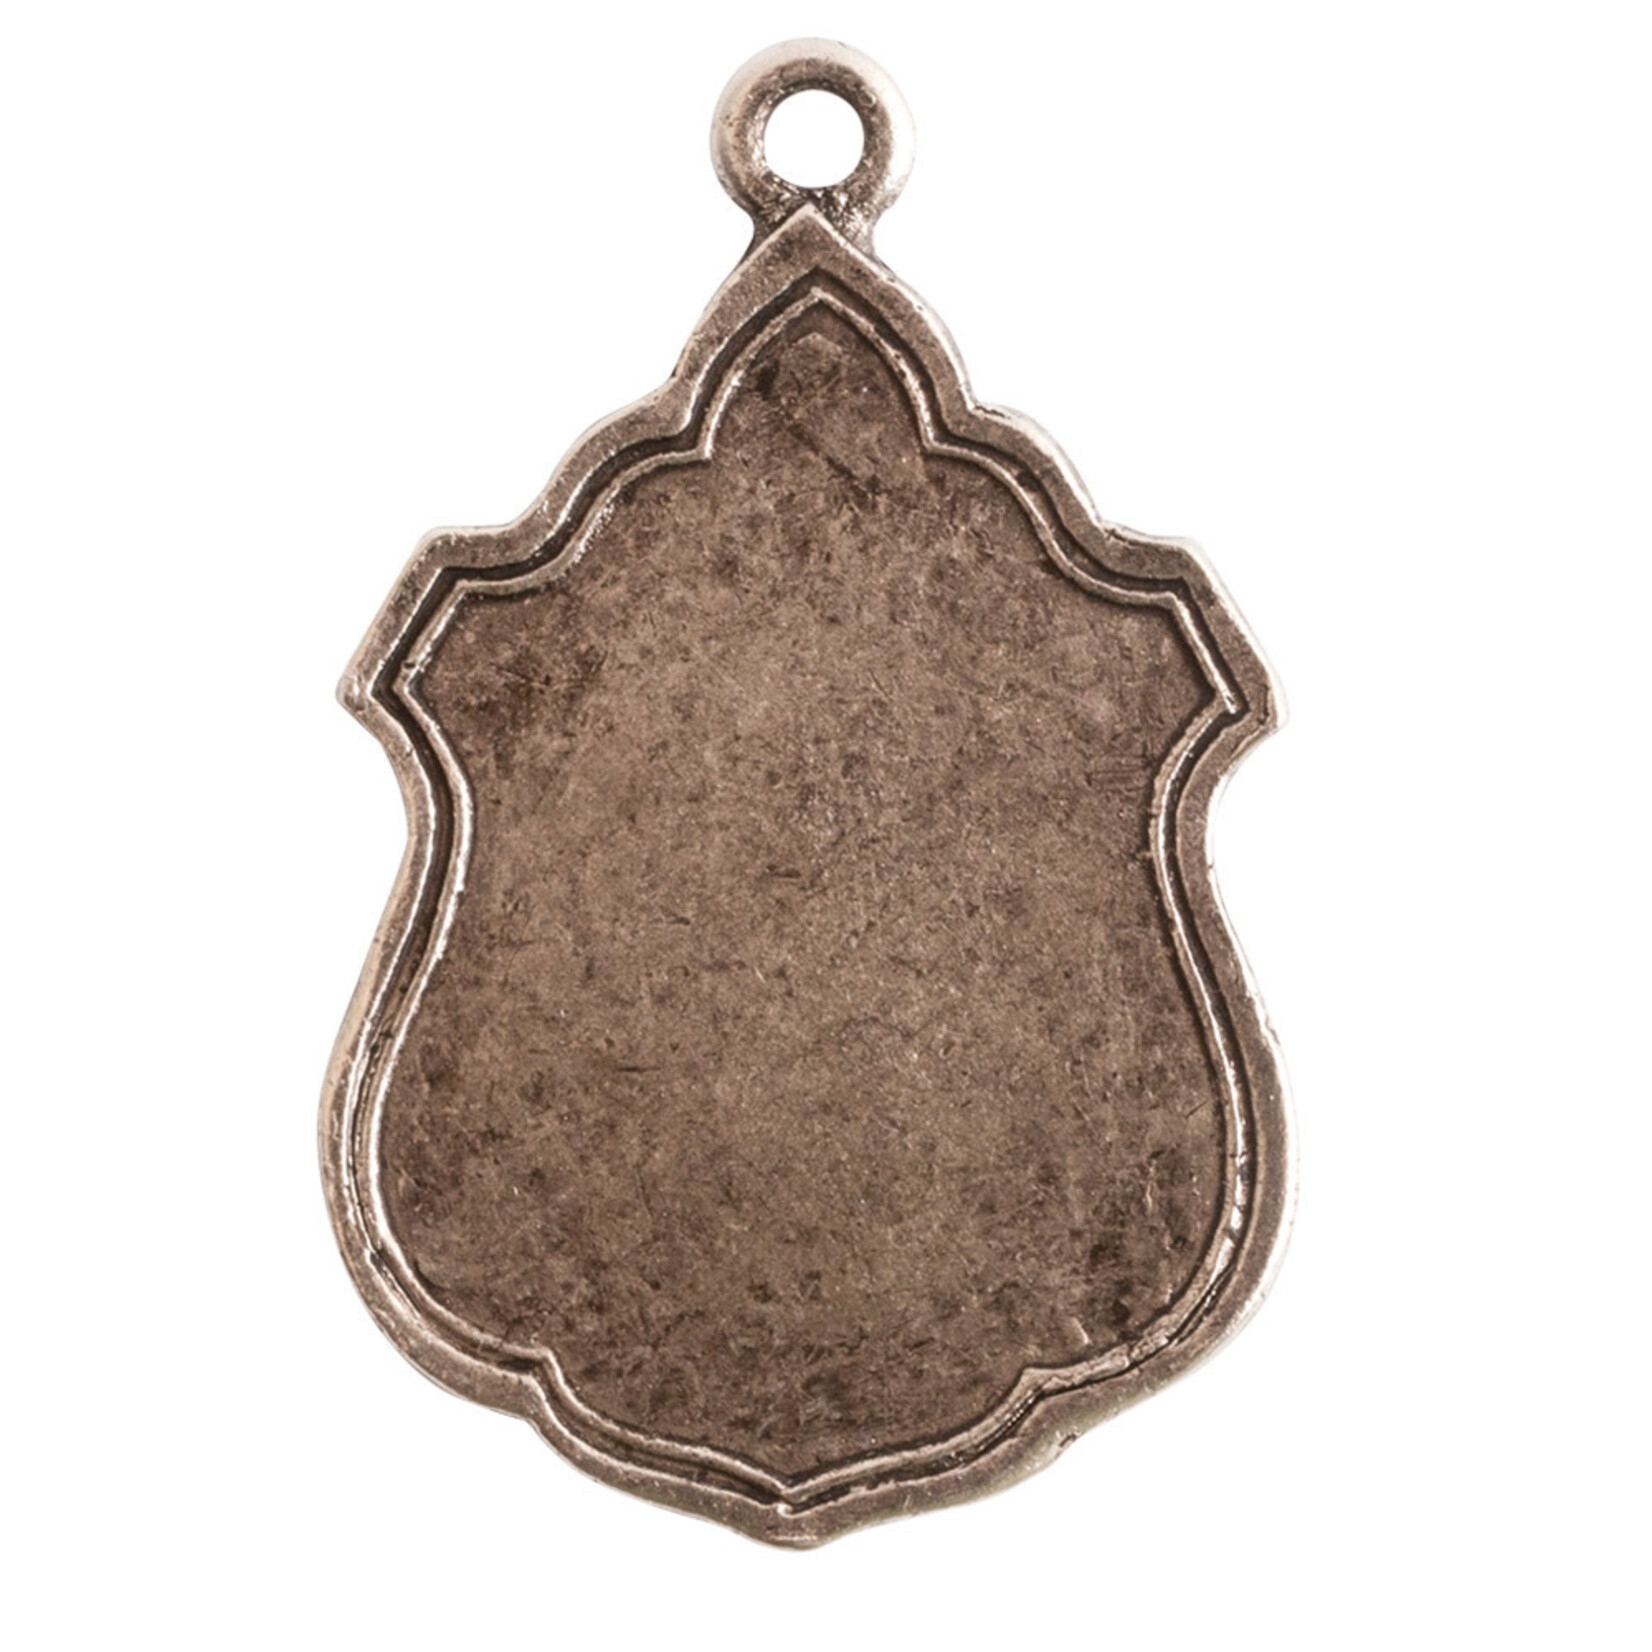 Nunn Design Nunn Design Flat Tag Ornate Ensign Antique Silver 1 Hole Pendant